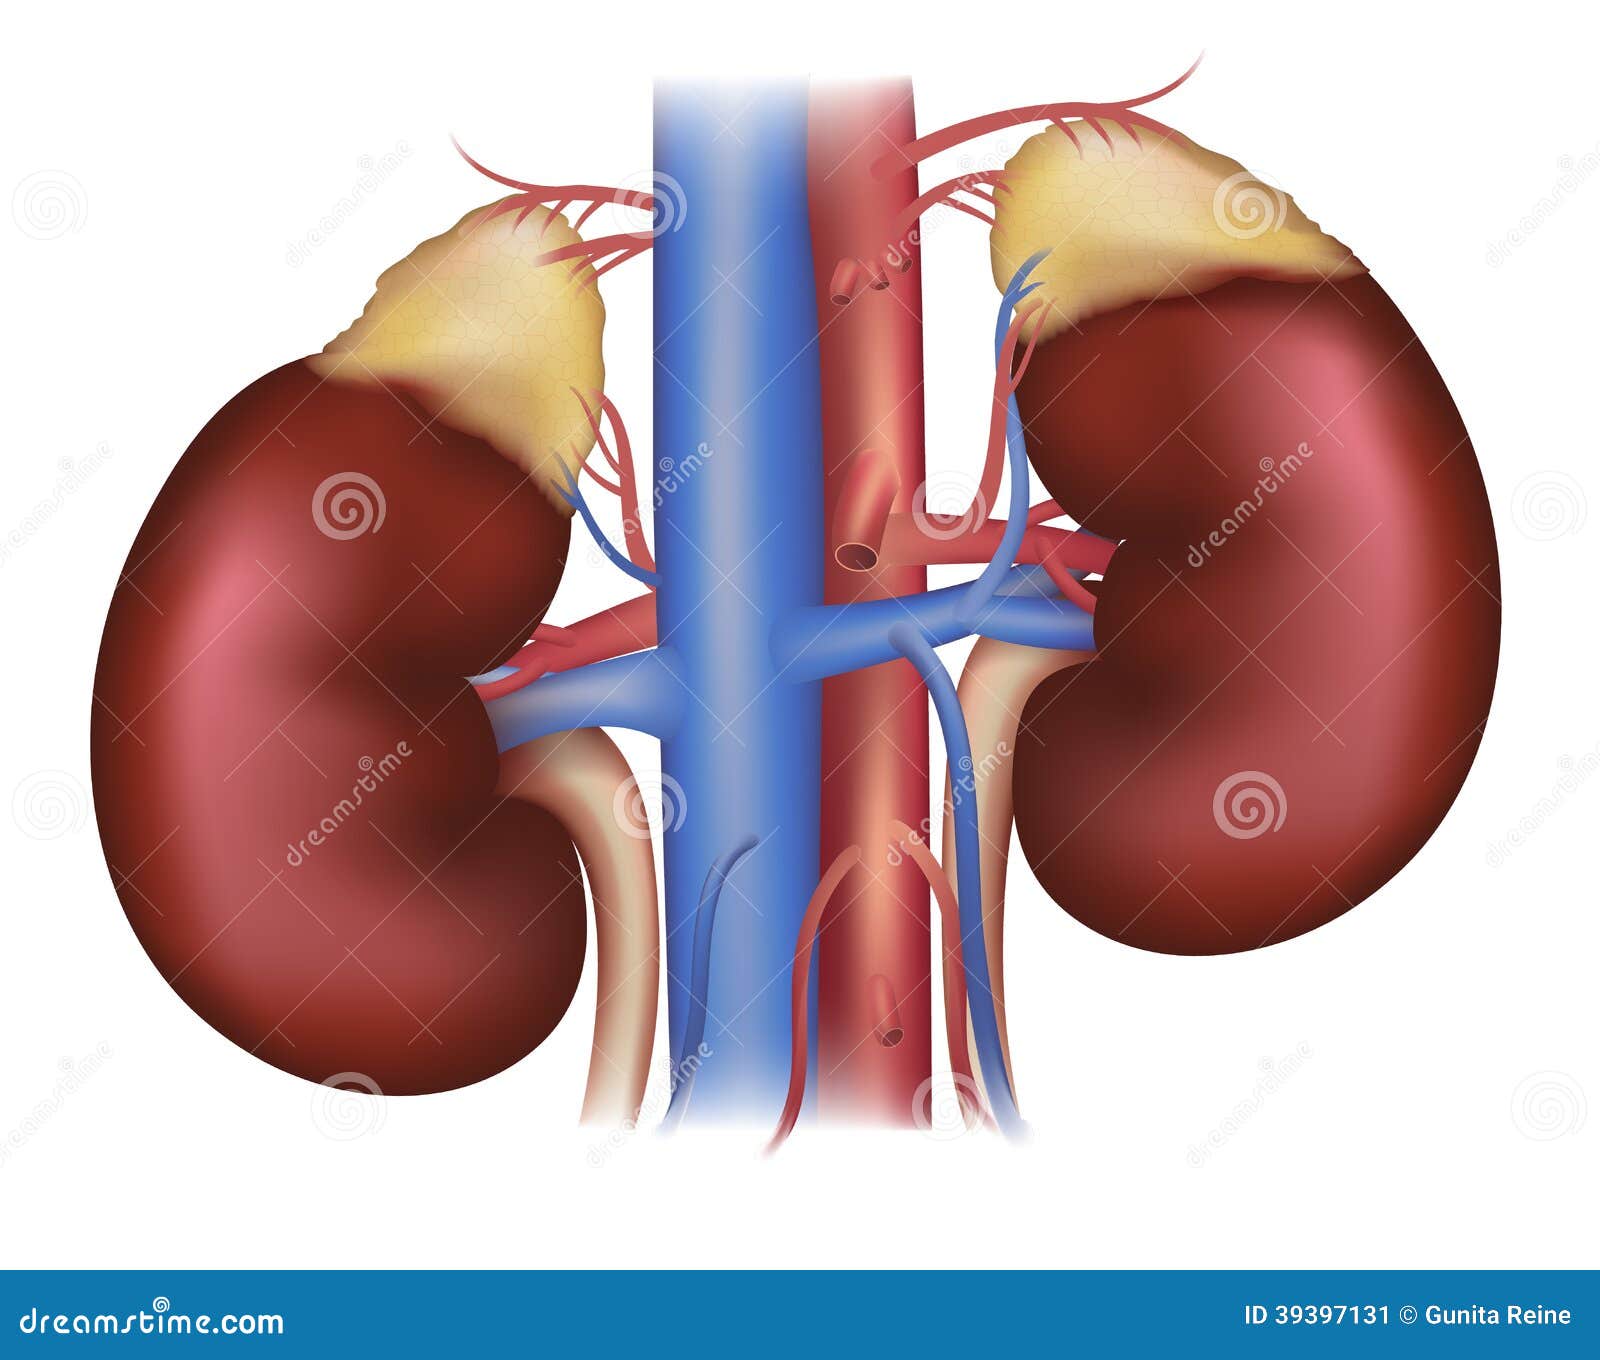 kidneys and adrenal glands, blood supply